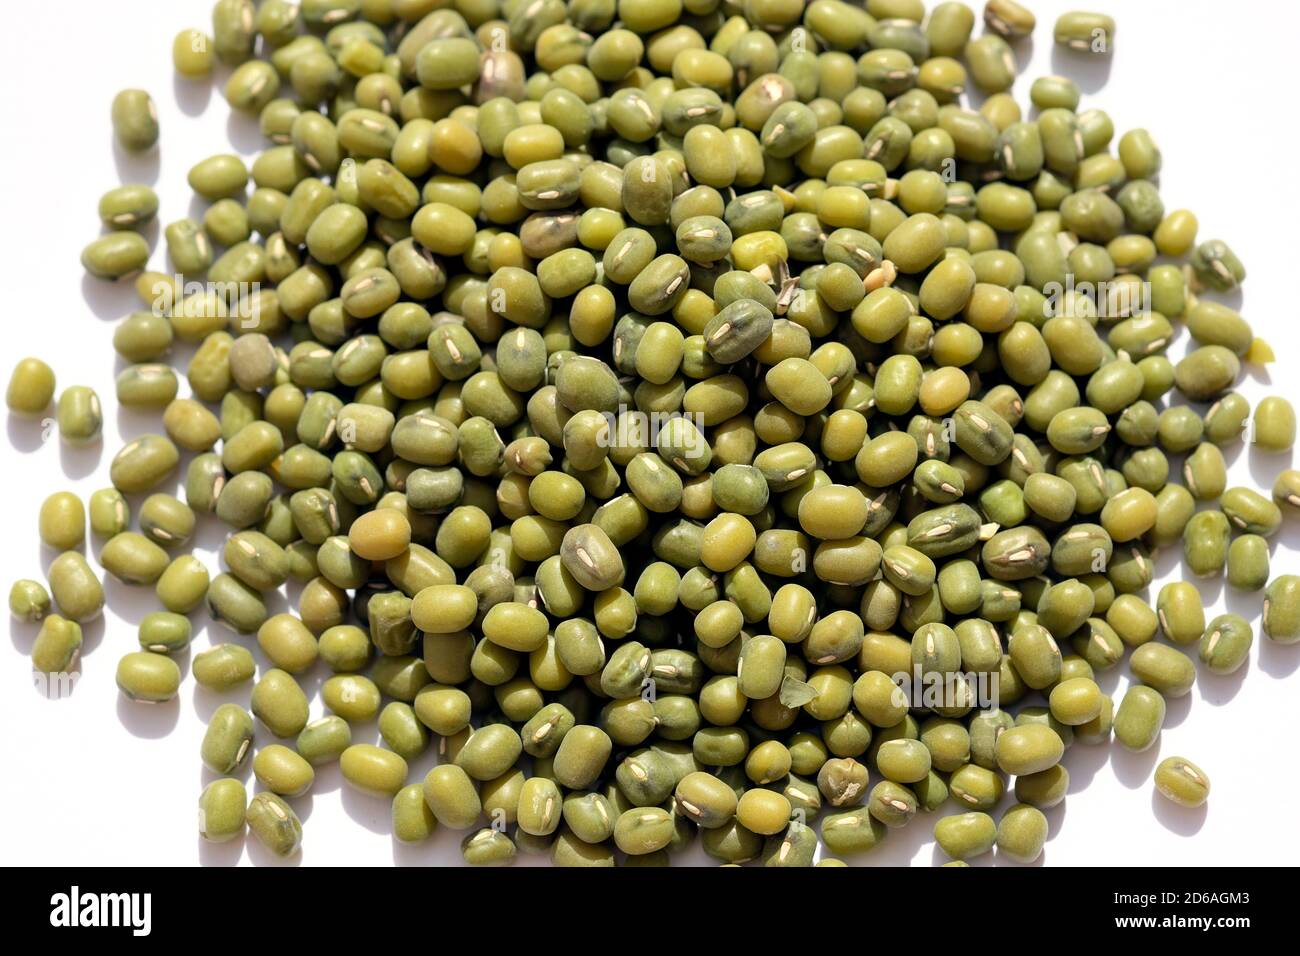 Mung beans background clouseup. Vigna radiata, Small dry raw green beans. Stock Photo